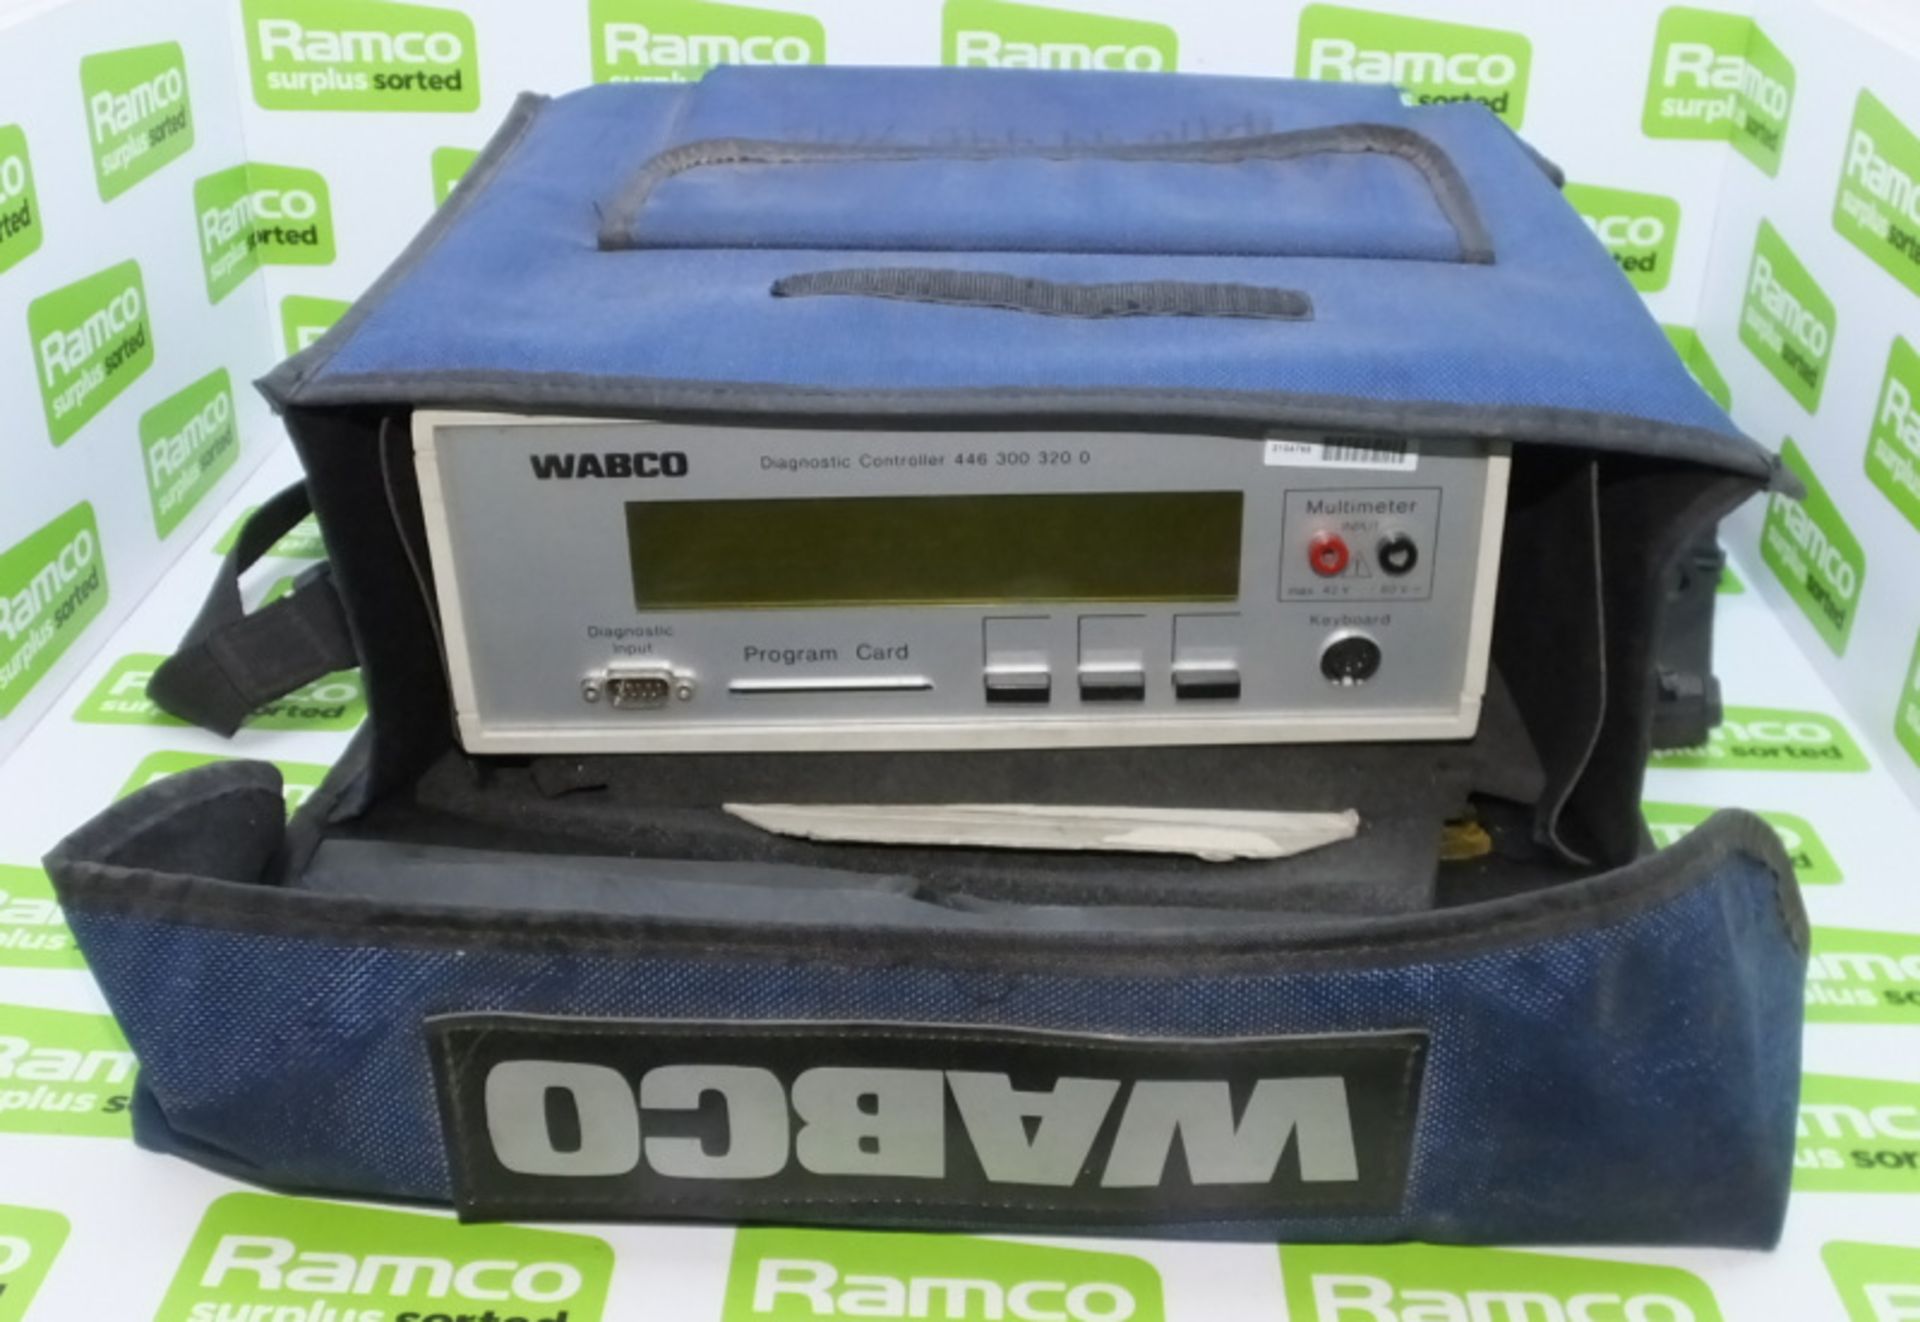 Wabco 446 300 320 0 ABS diagnostic controller kit